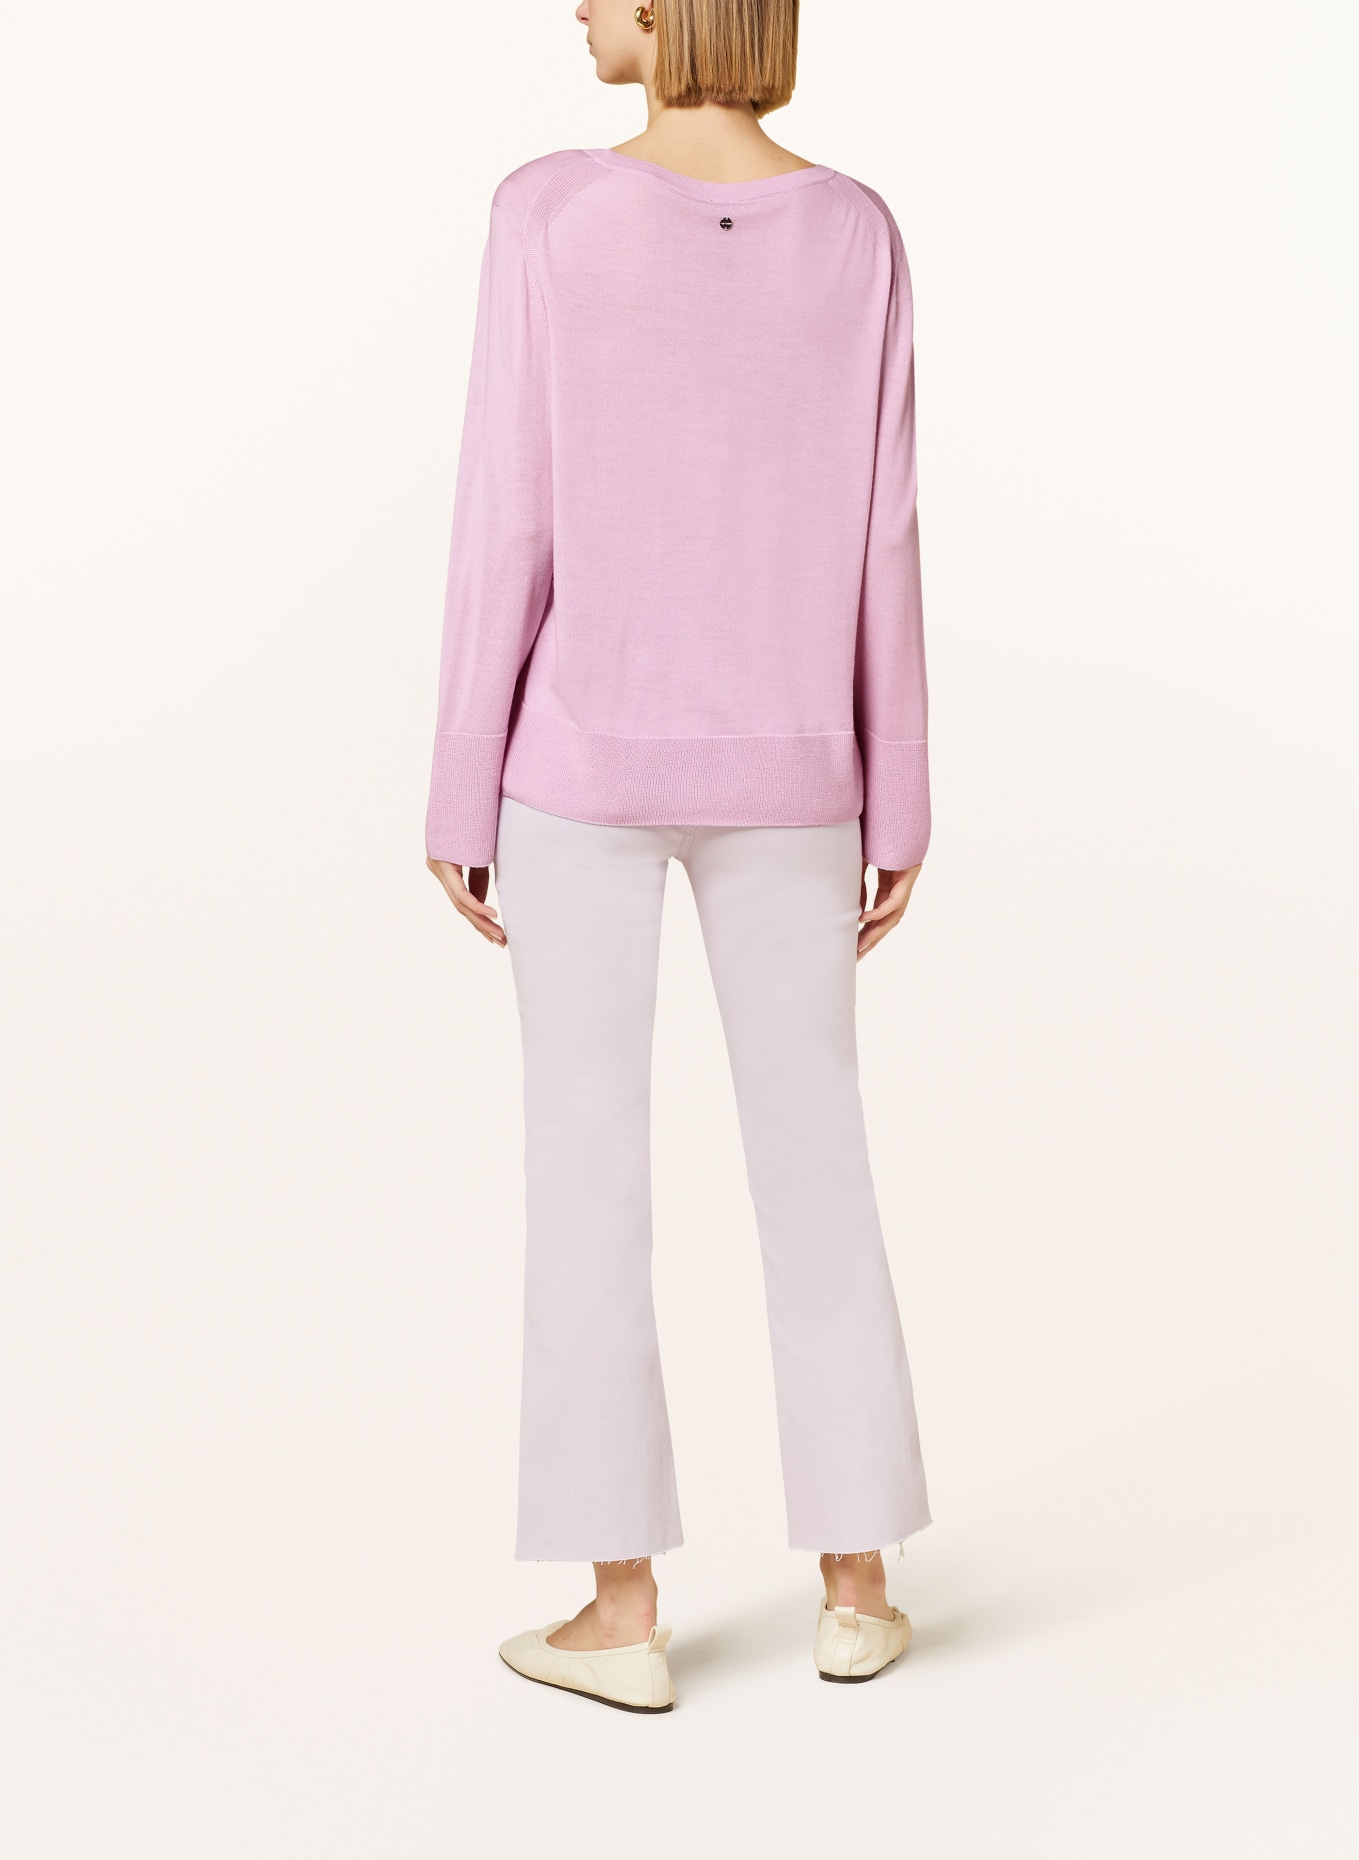 MARC CAIN Pullover, Farbe: 709 pink lavender (Bild 3)